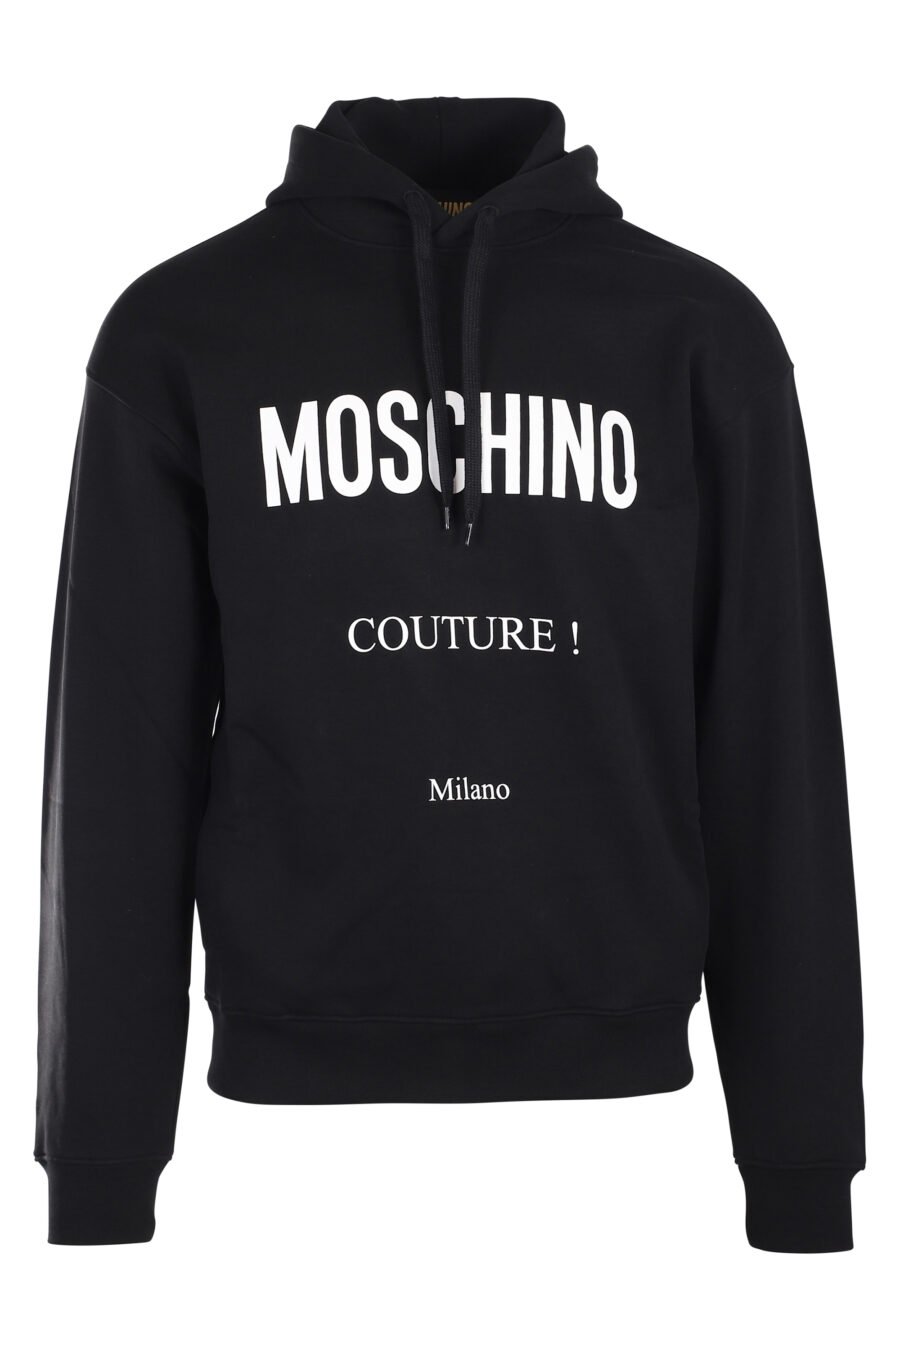 Black hooded sweatshirt with milano logo - IMG 9904